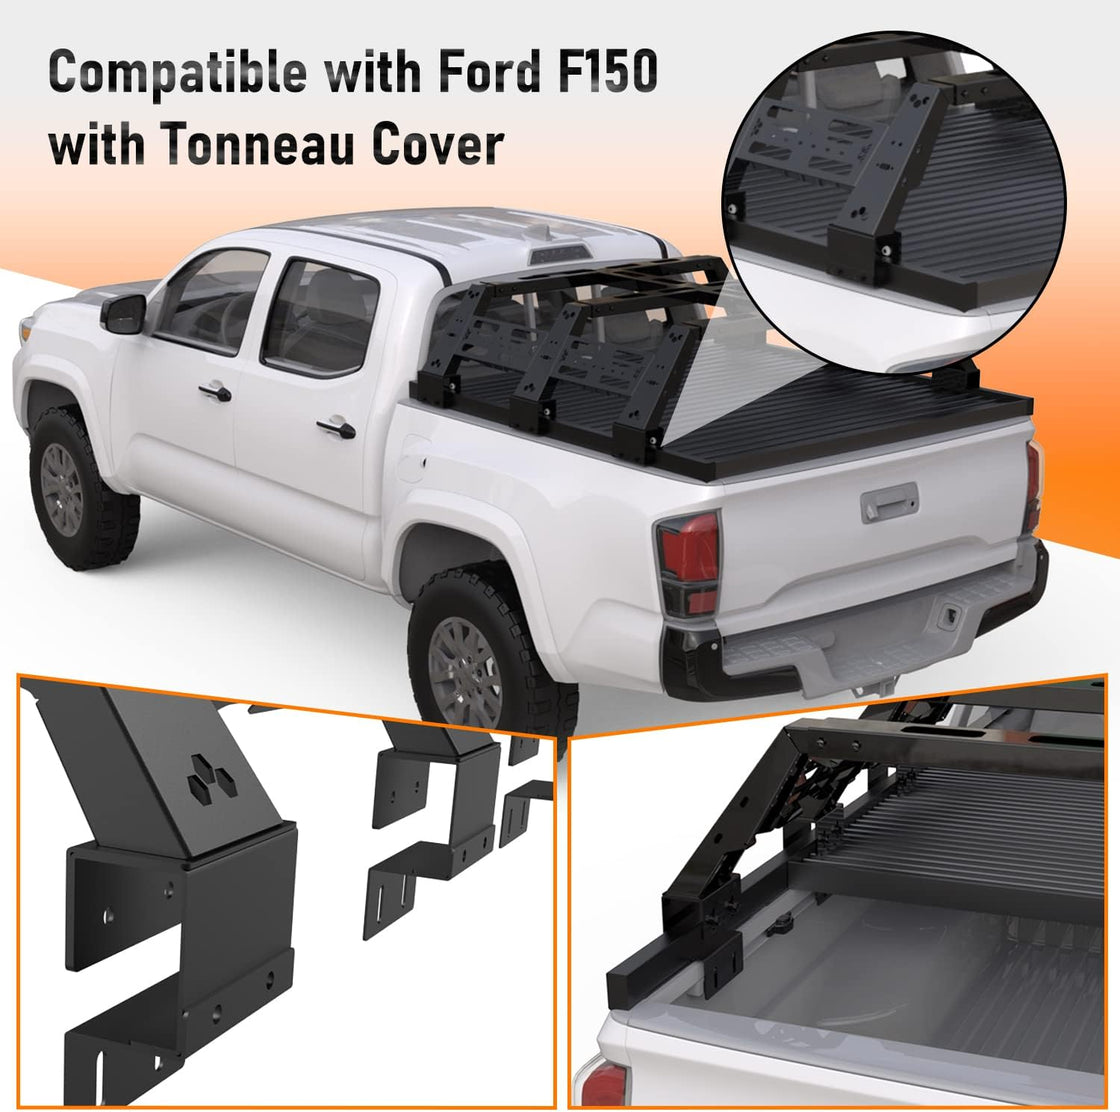 Ford F150 Overland Bed Rack